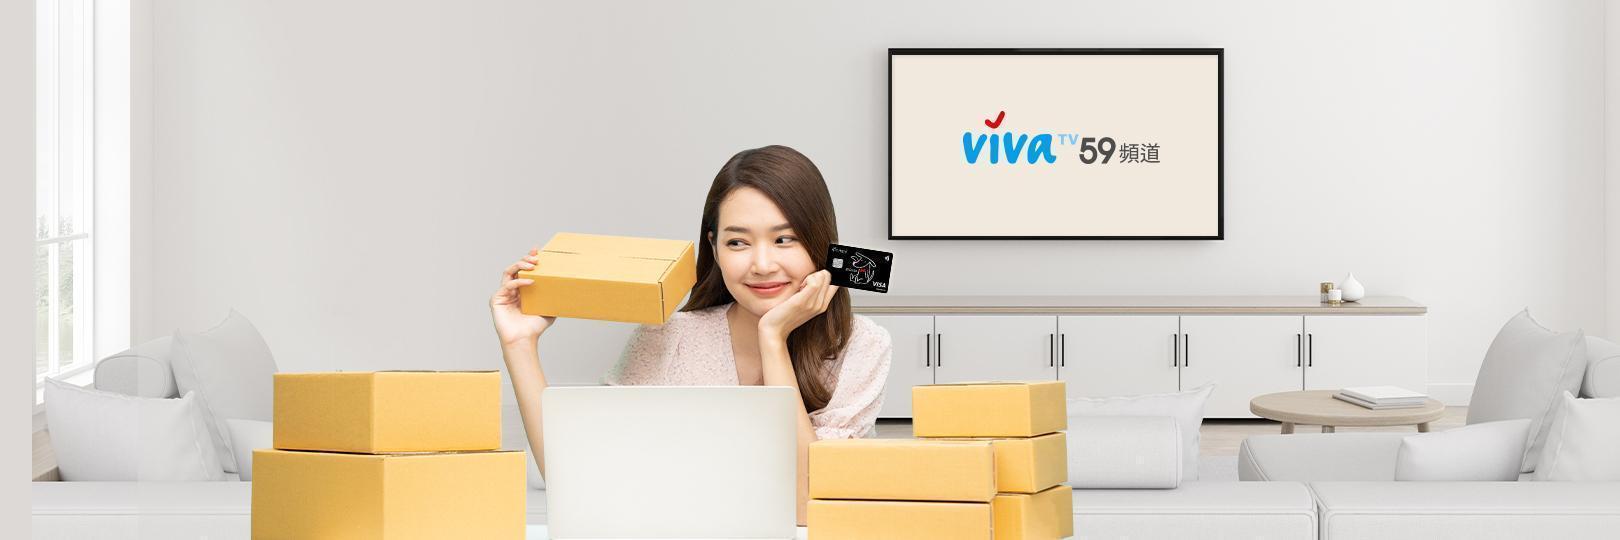 ViVa TV購物 刷台新信用卡滿額最高現折3佰元